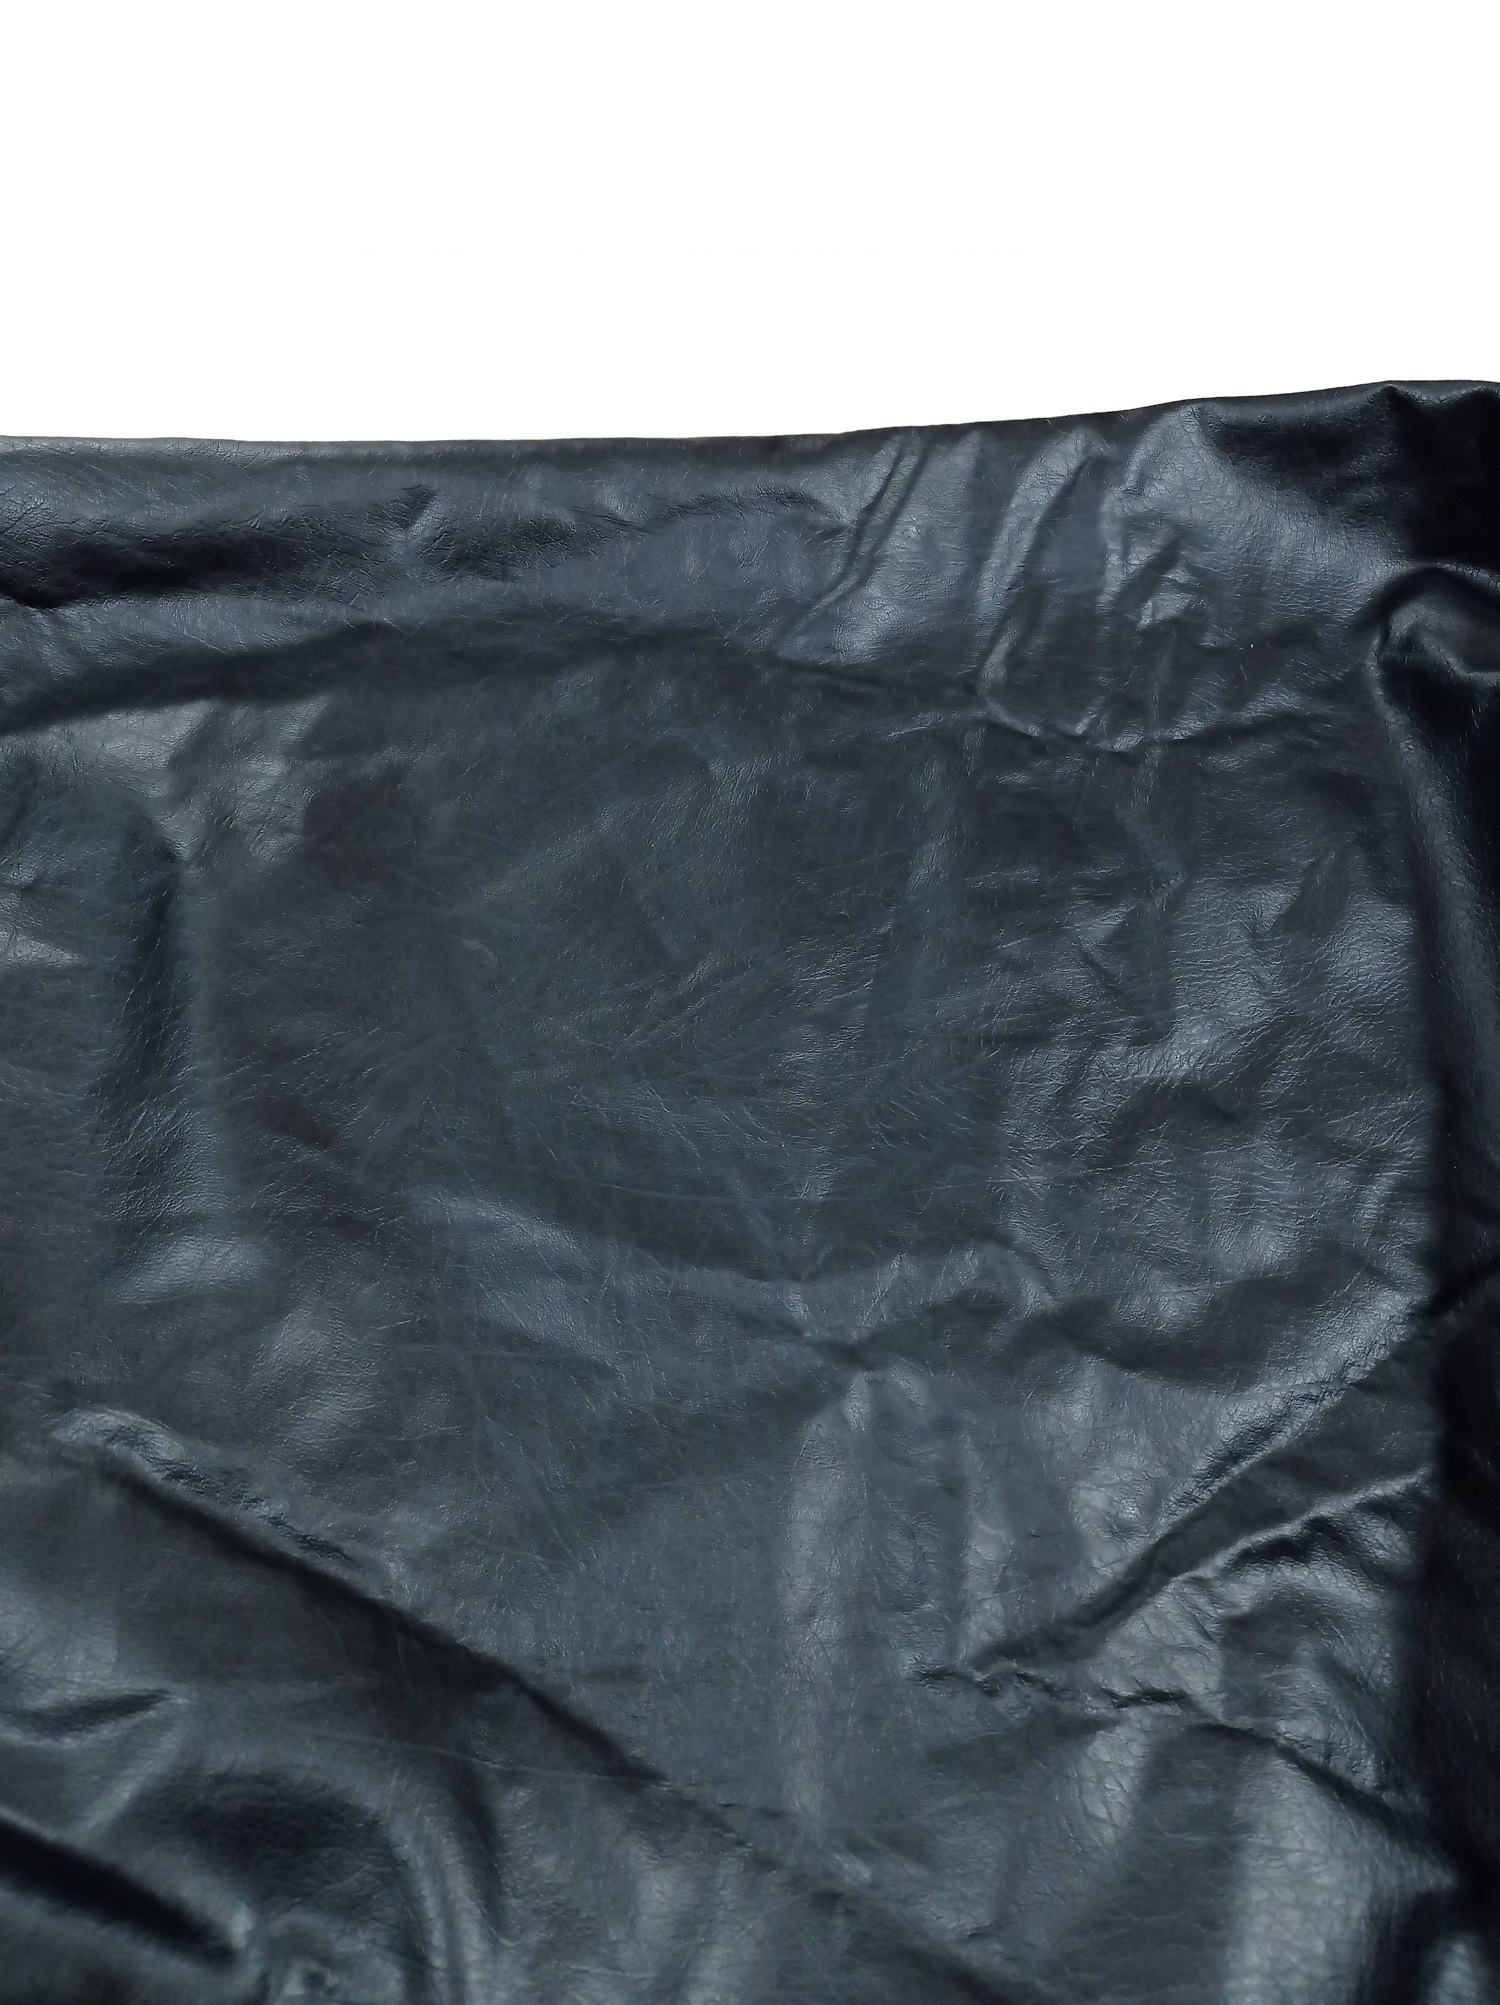 MERCEDES SPRINTER BONNET BRA PVC Leather Black 2006-2013